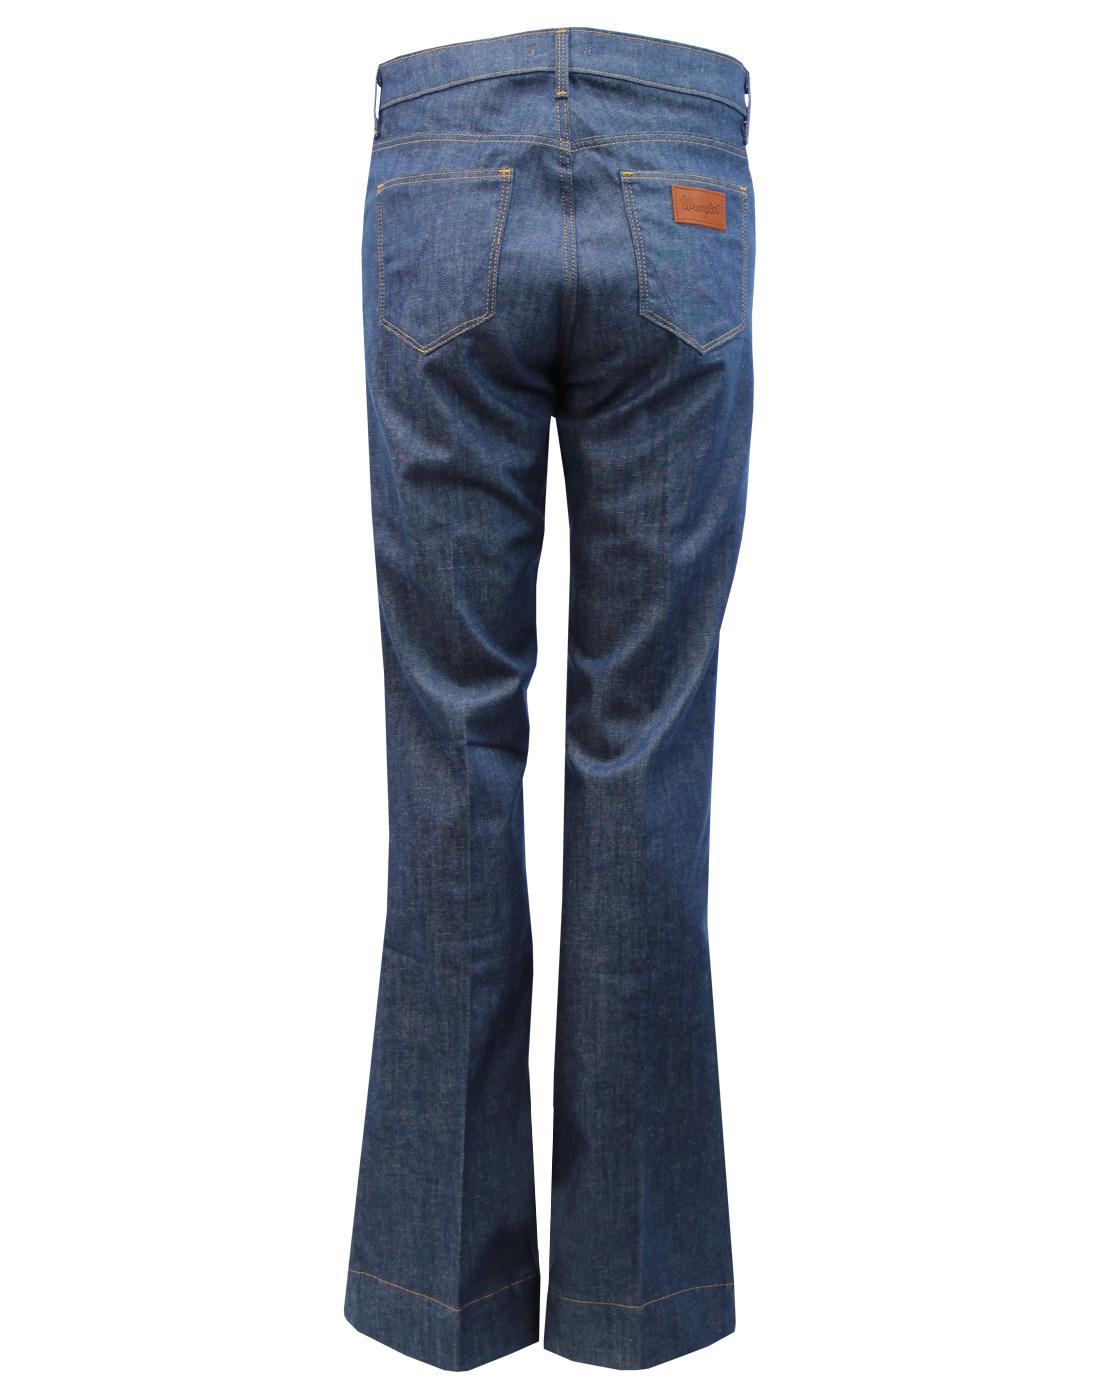 WRANGLER Retro 1970s Indie Stretch Denim Flared Jeans Light Blue